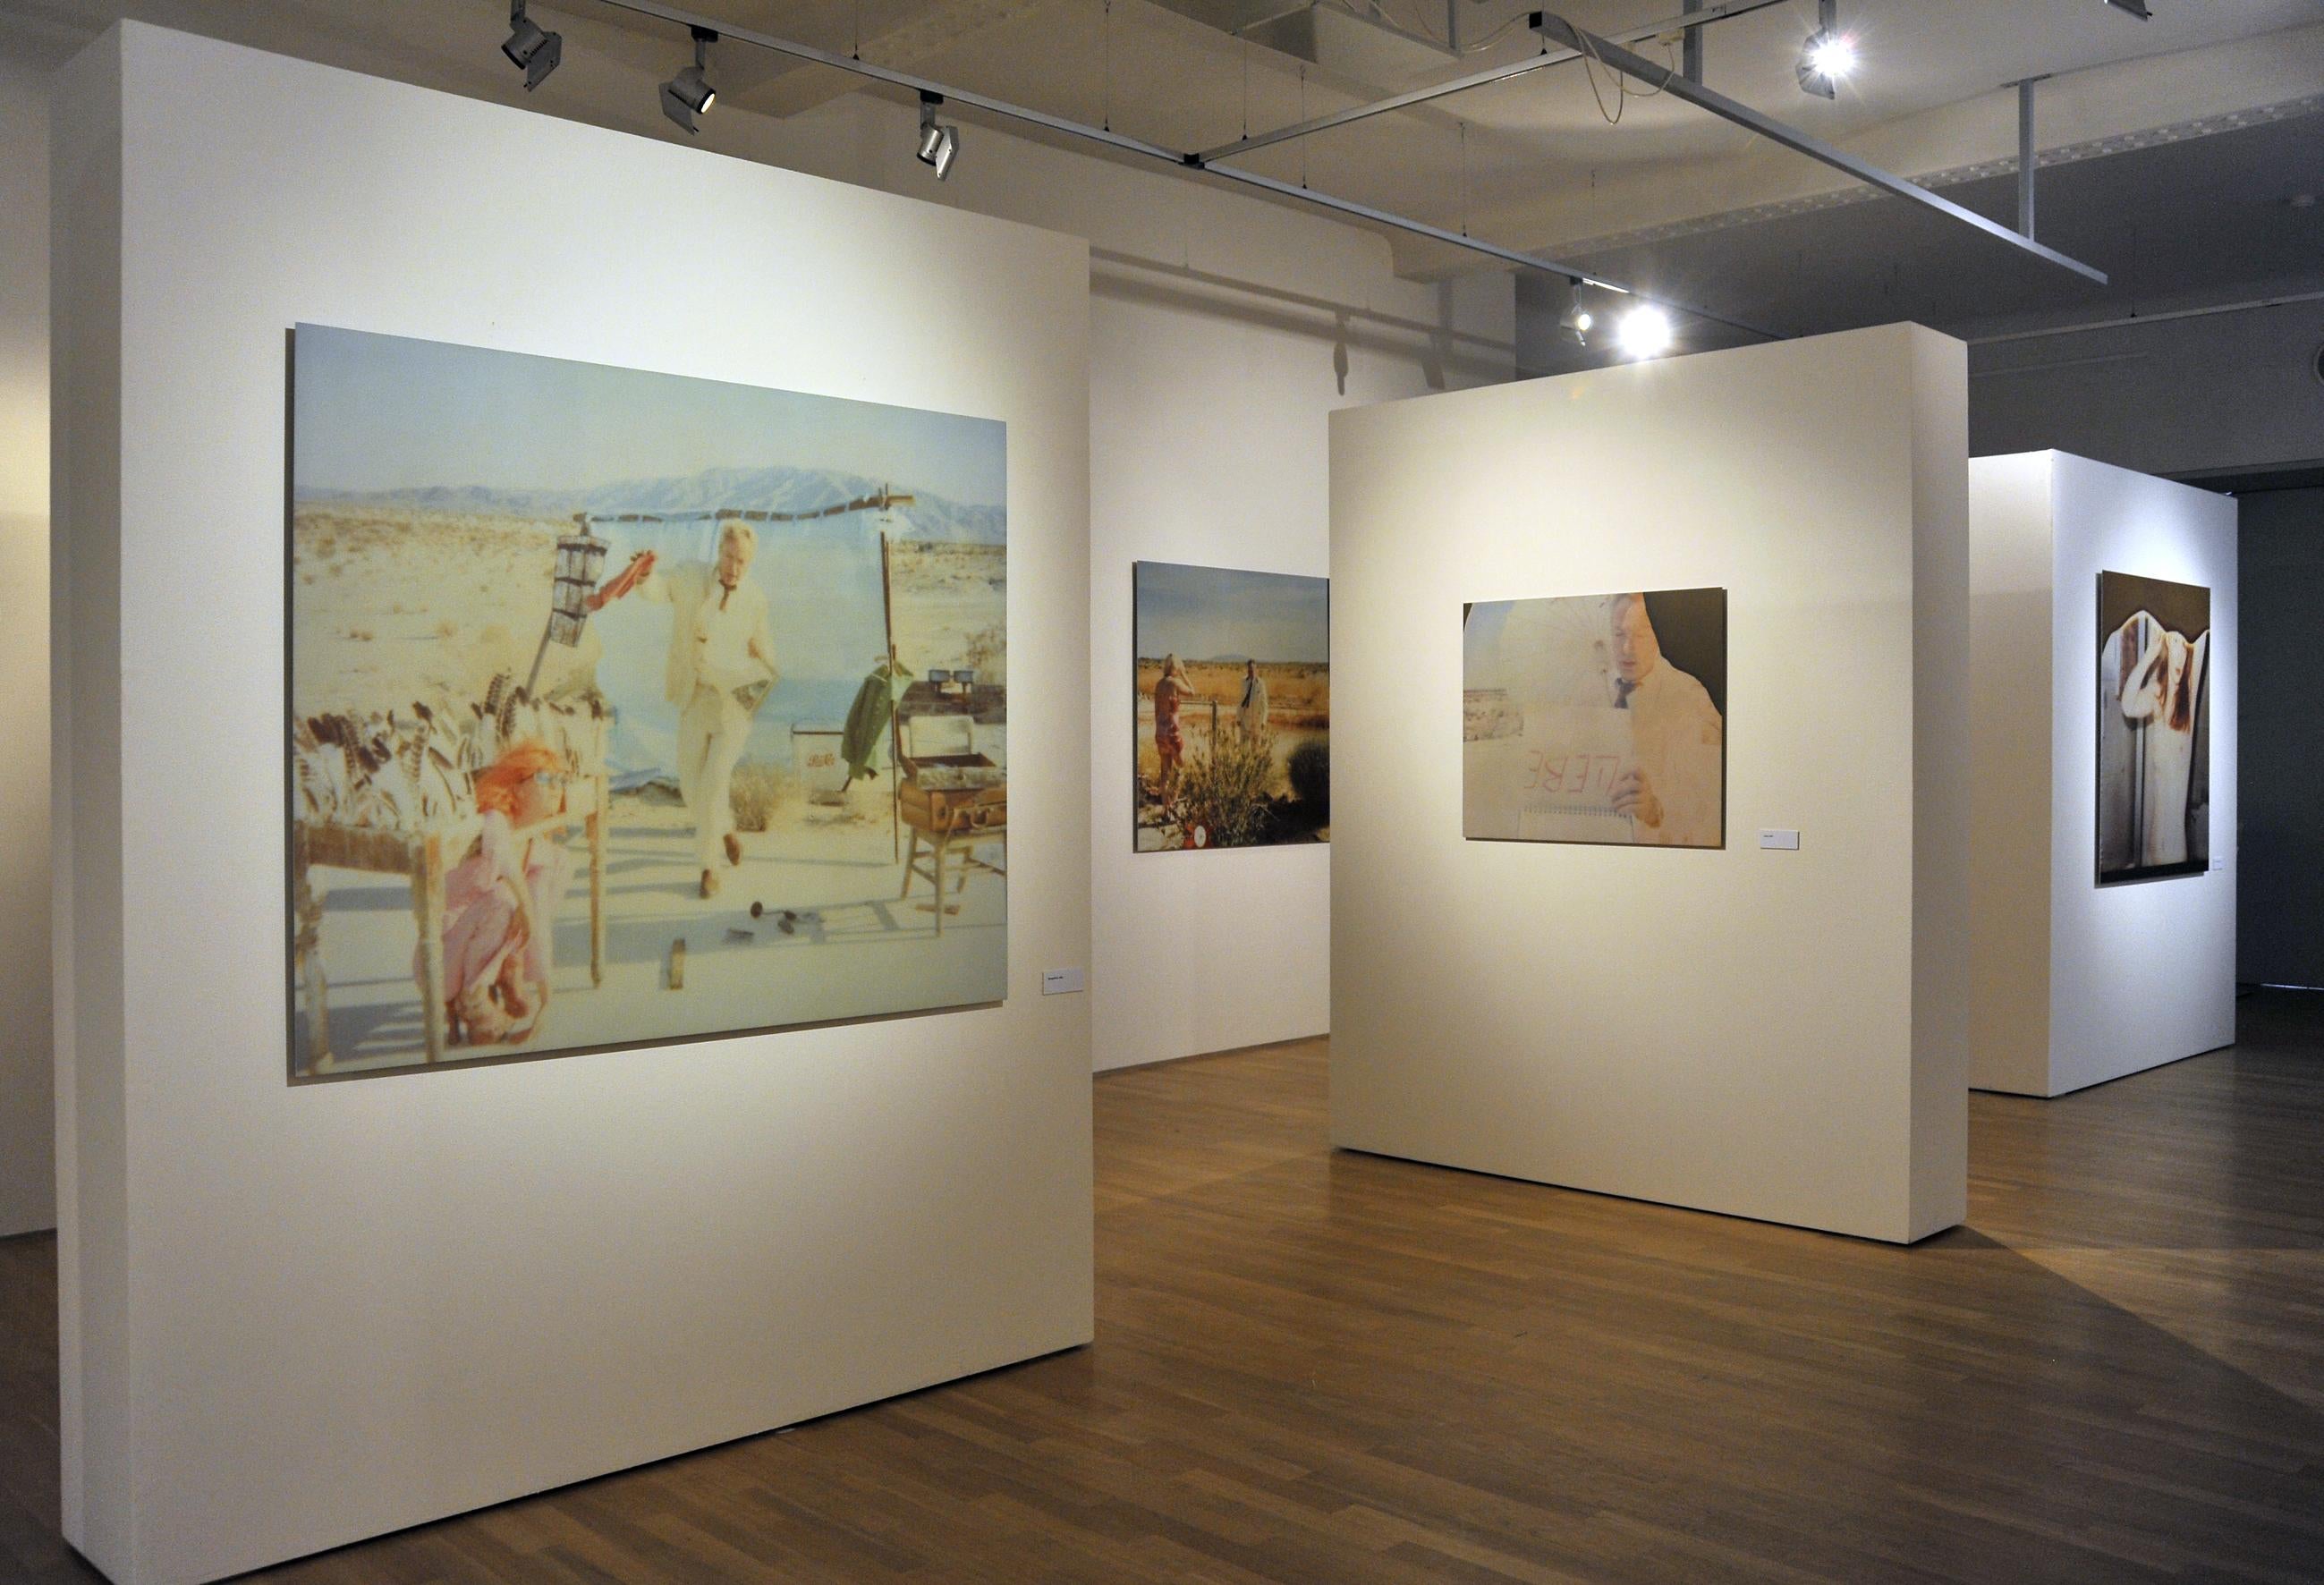 Spiegelbild (Stage of Consciosness), analogique, 125 x154 cm, avec Udo Kier - Contemporain Photograph par Stefanie Schneider